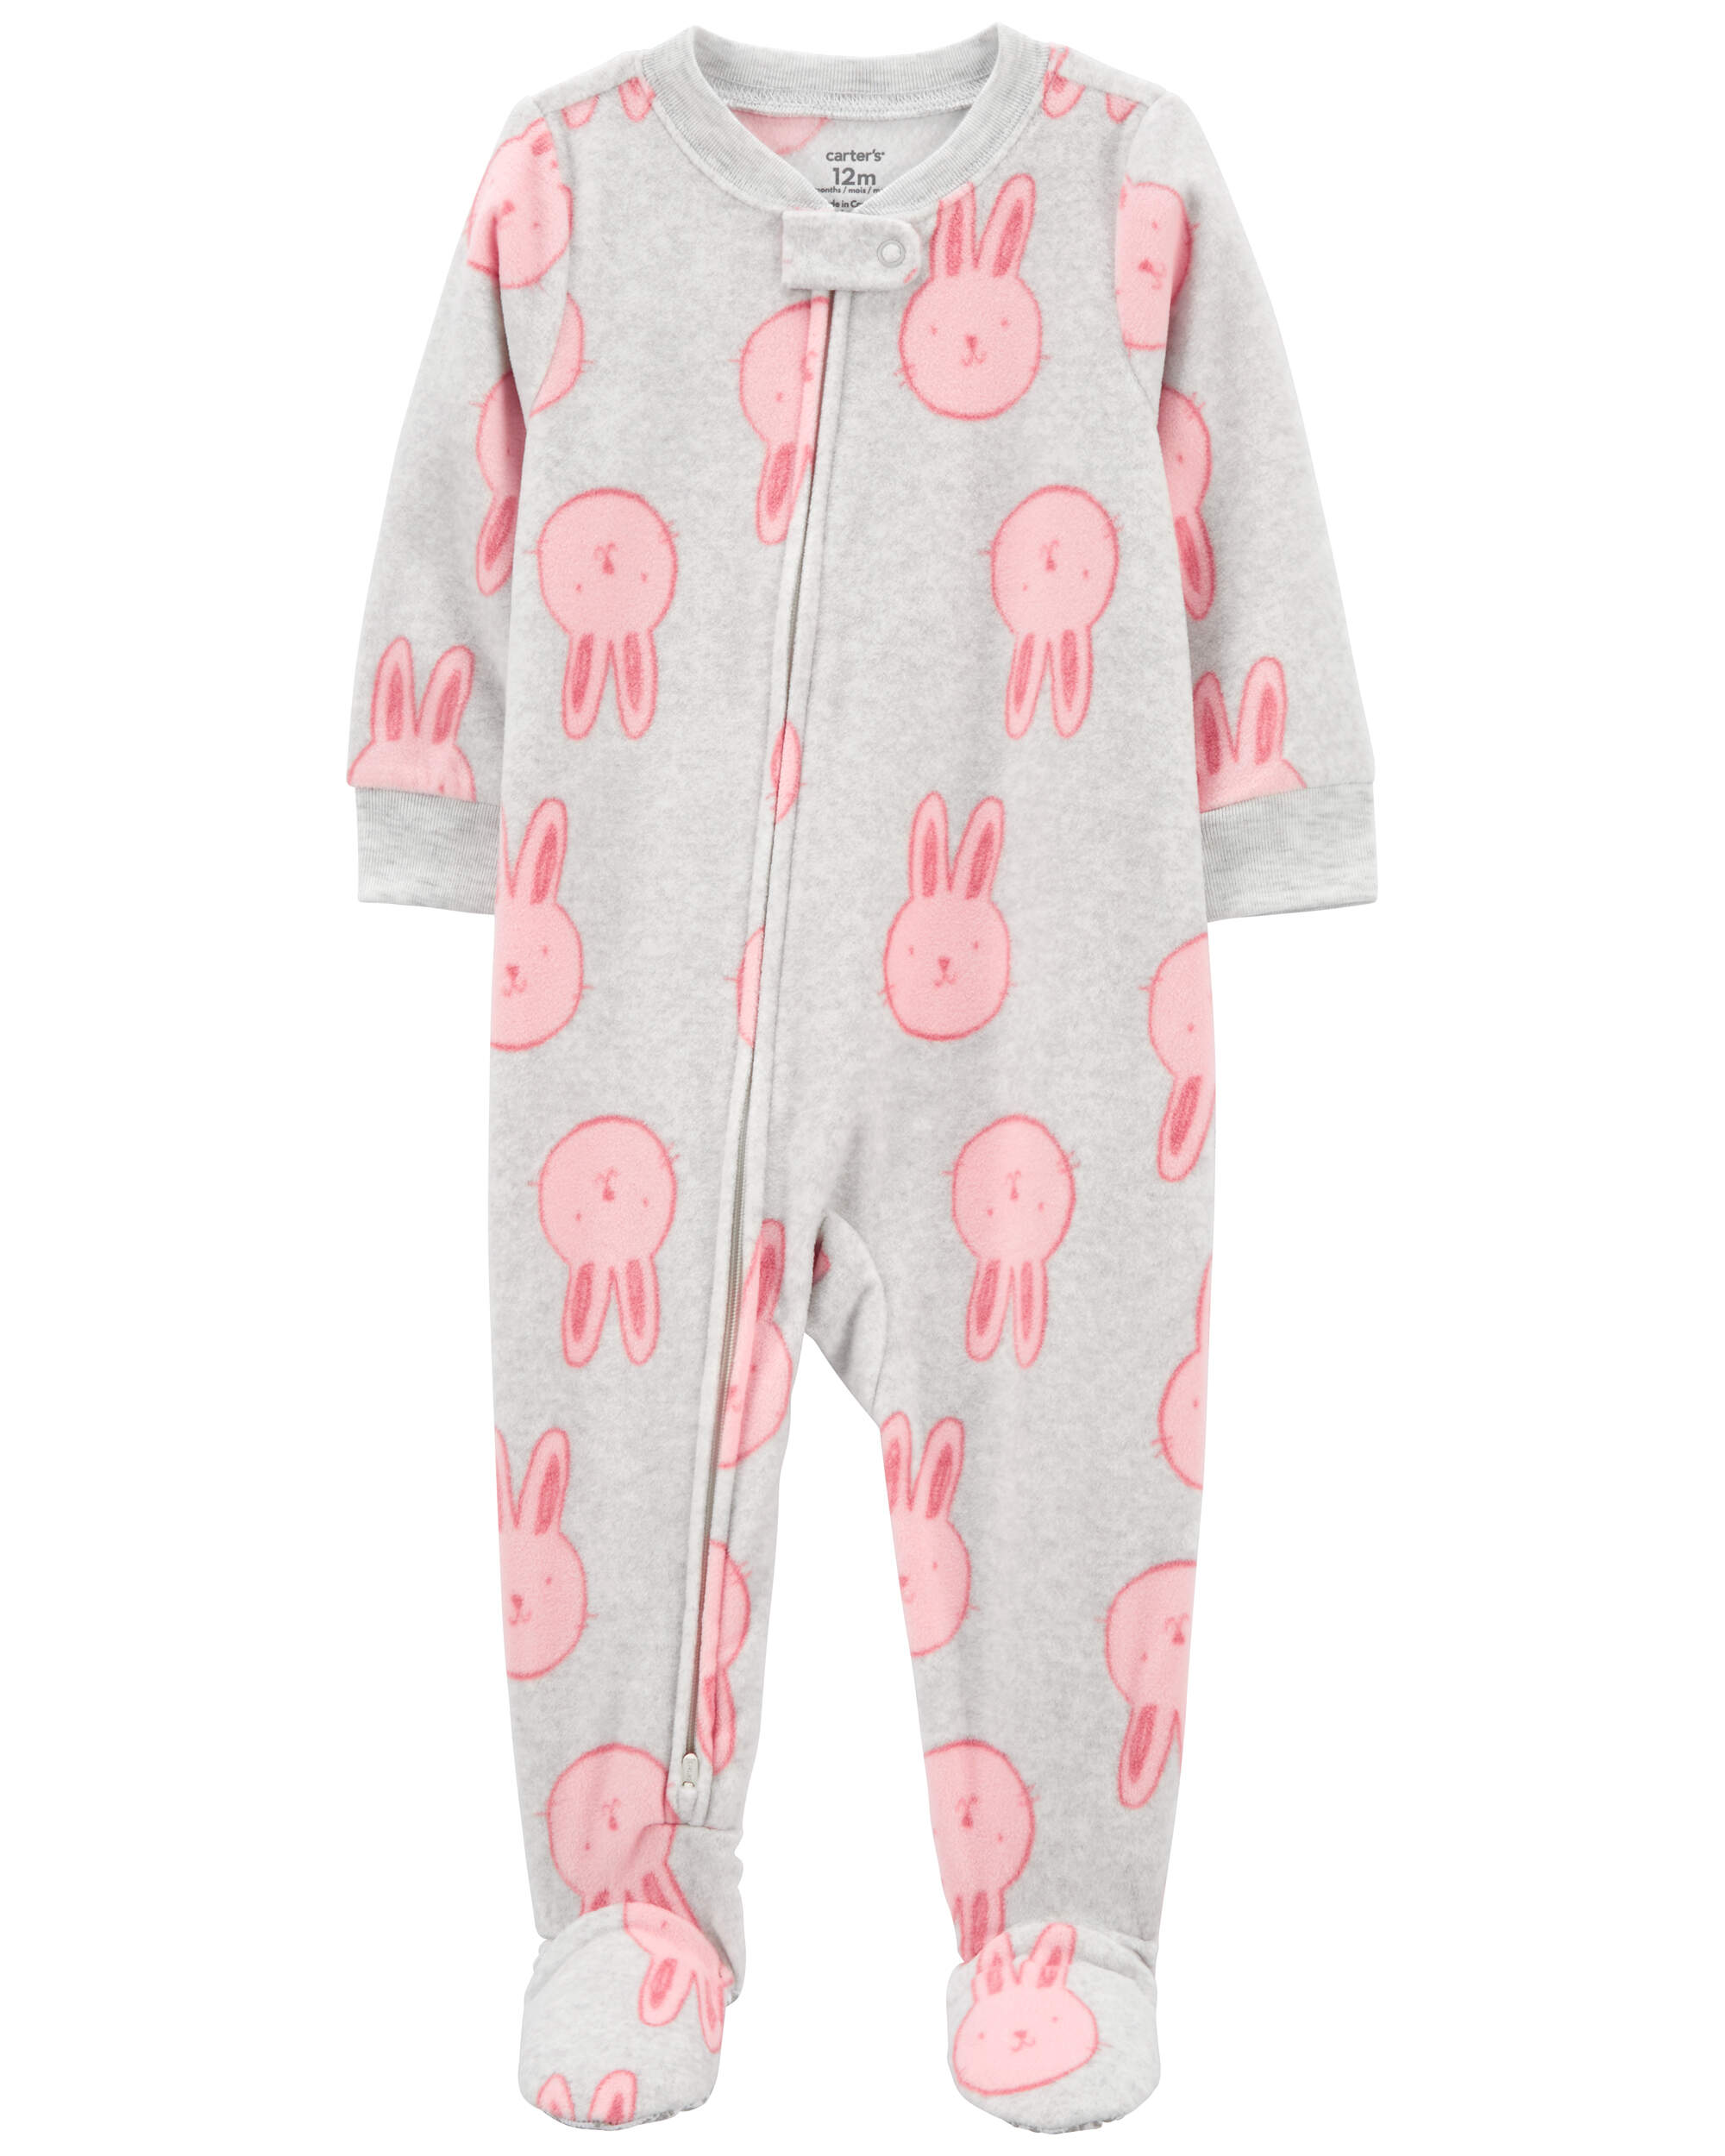 Toddler 1-Piece Animals Fleece Footie Pyjamas